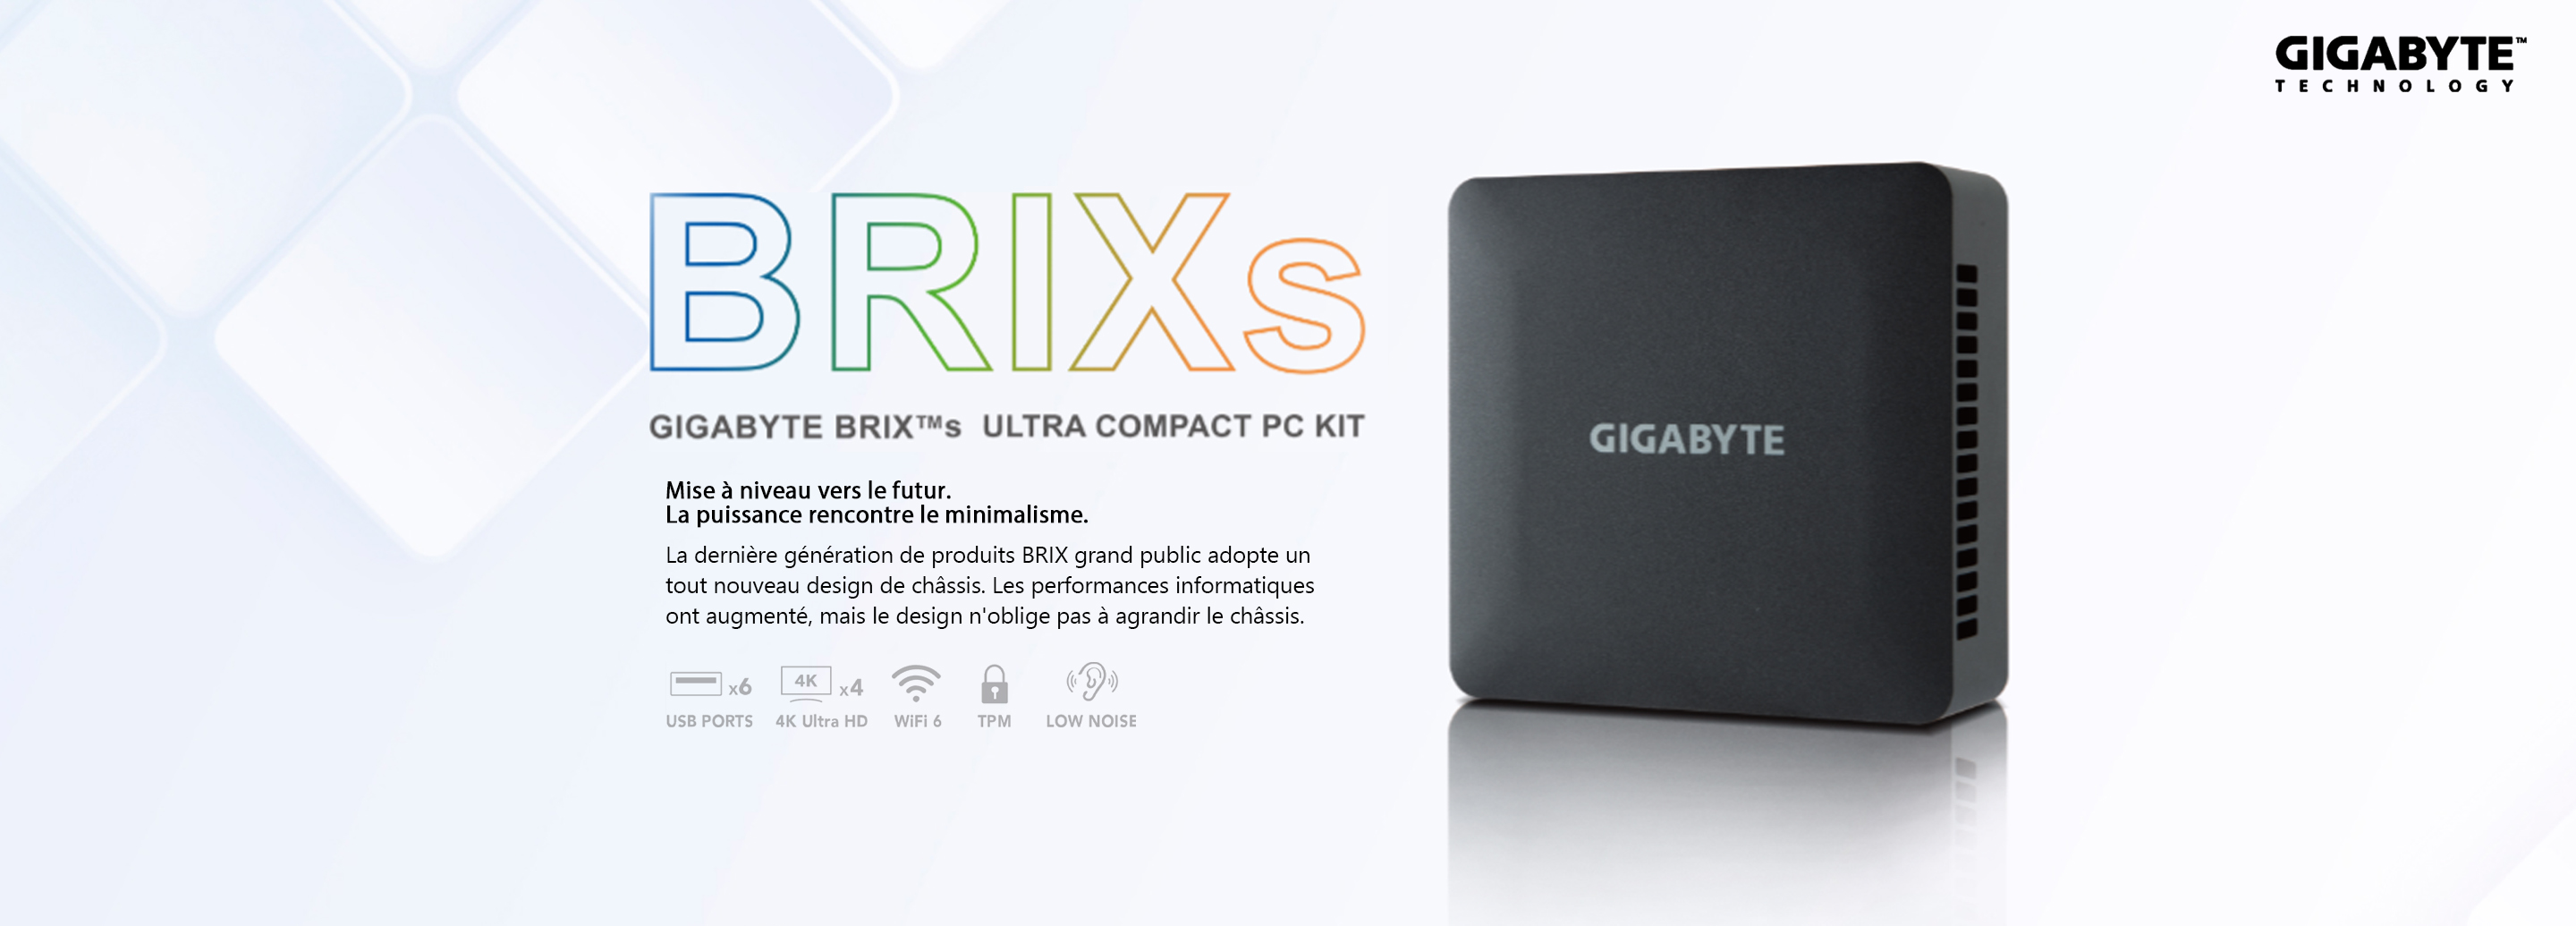 gigabyte brix s 